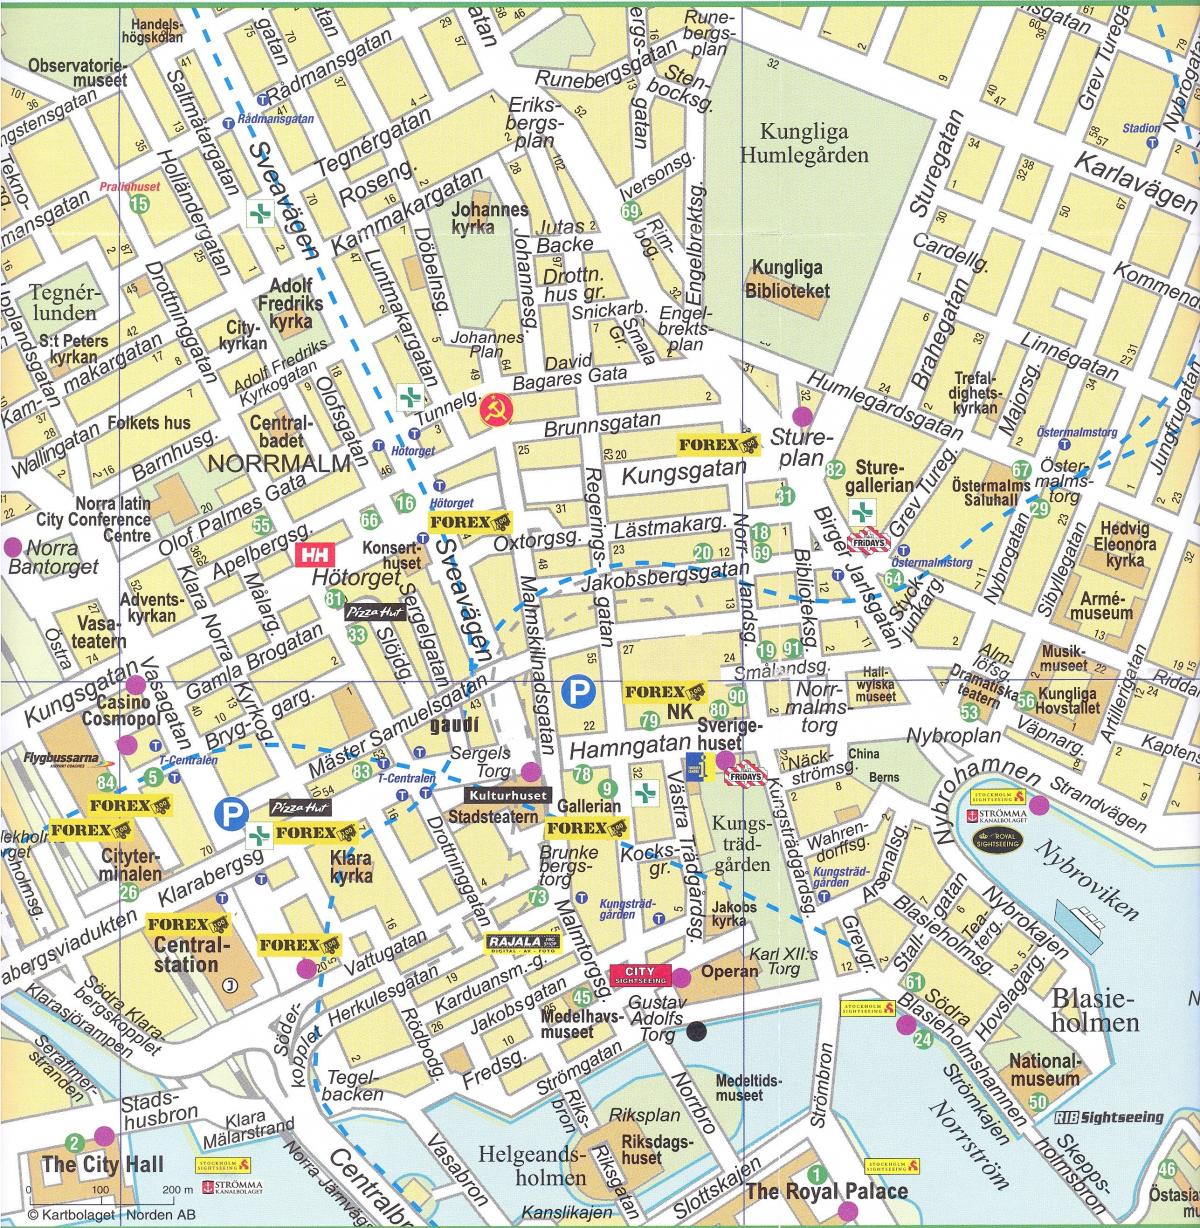 mapa do centro da cidade de Estocolmo